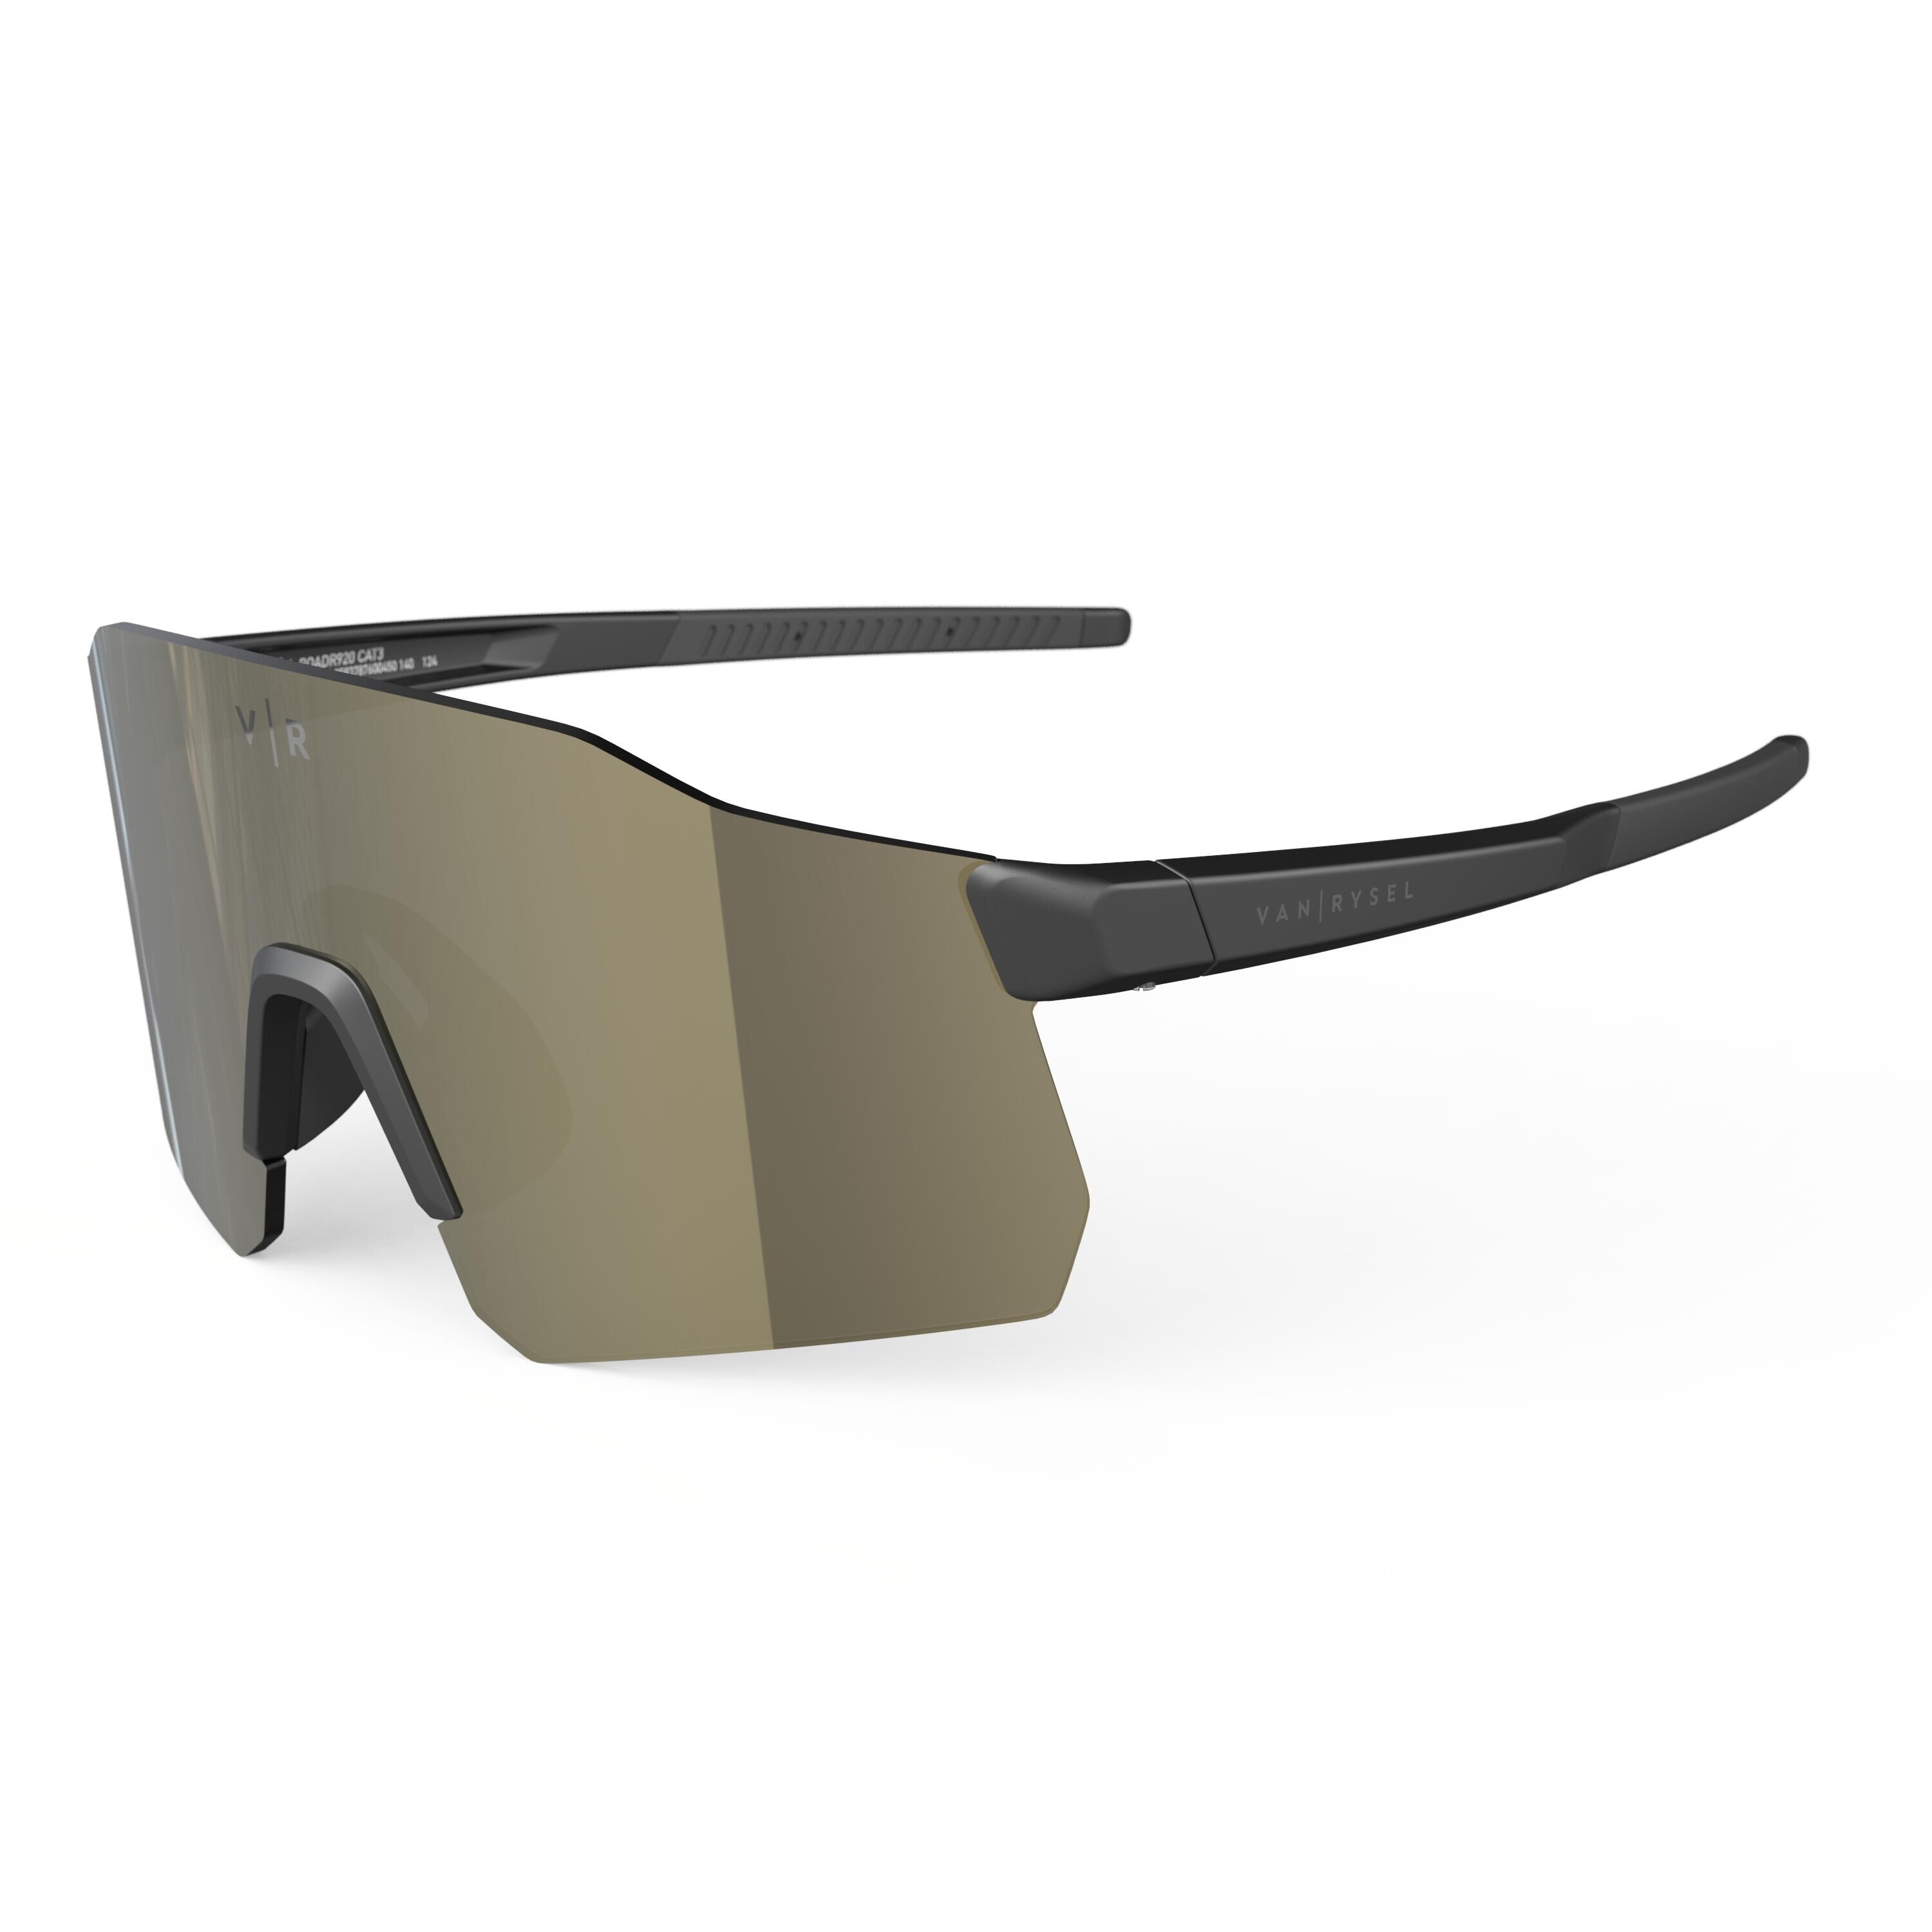 VAN RYSEL Adult Cycling Sunglasses RoadR 920 Category 3 High-Definition - Black/Gold